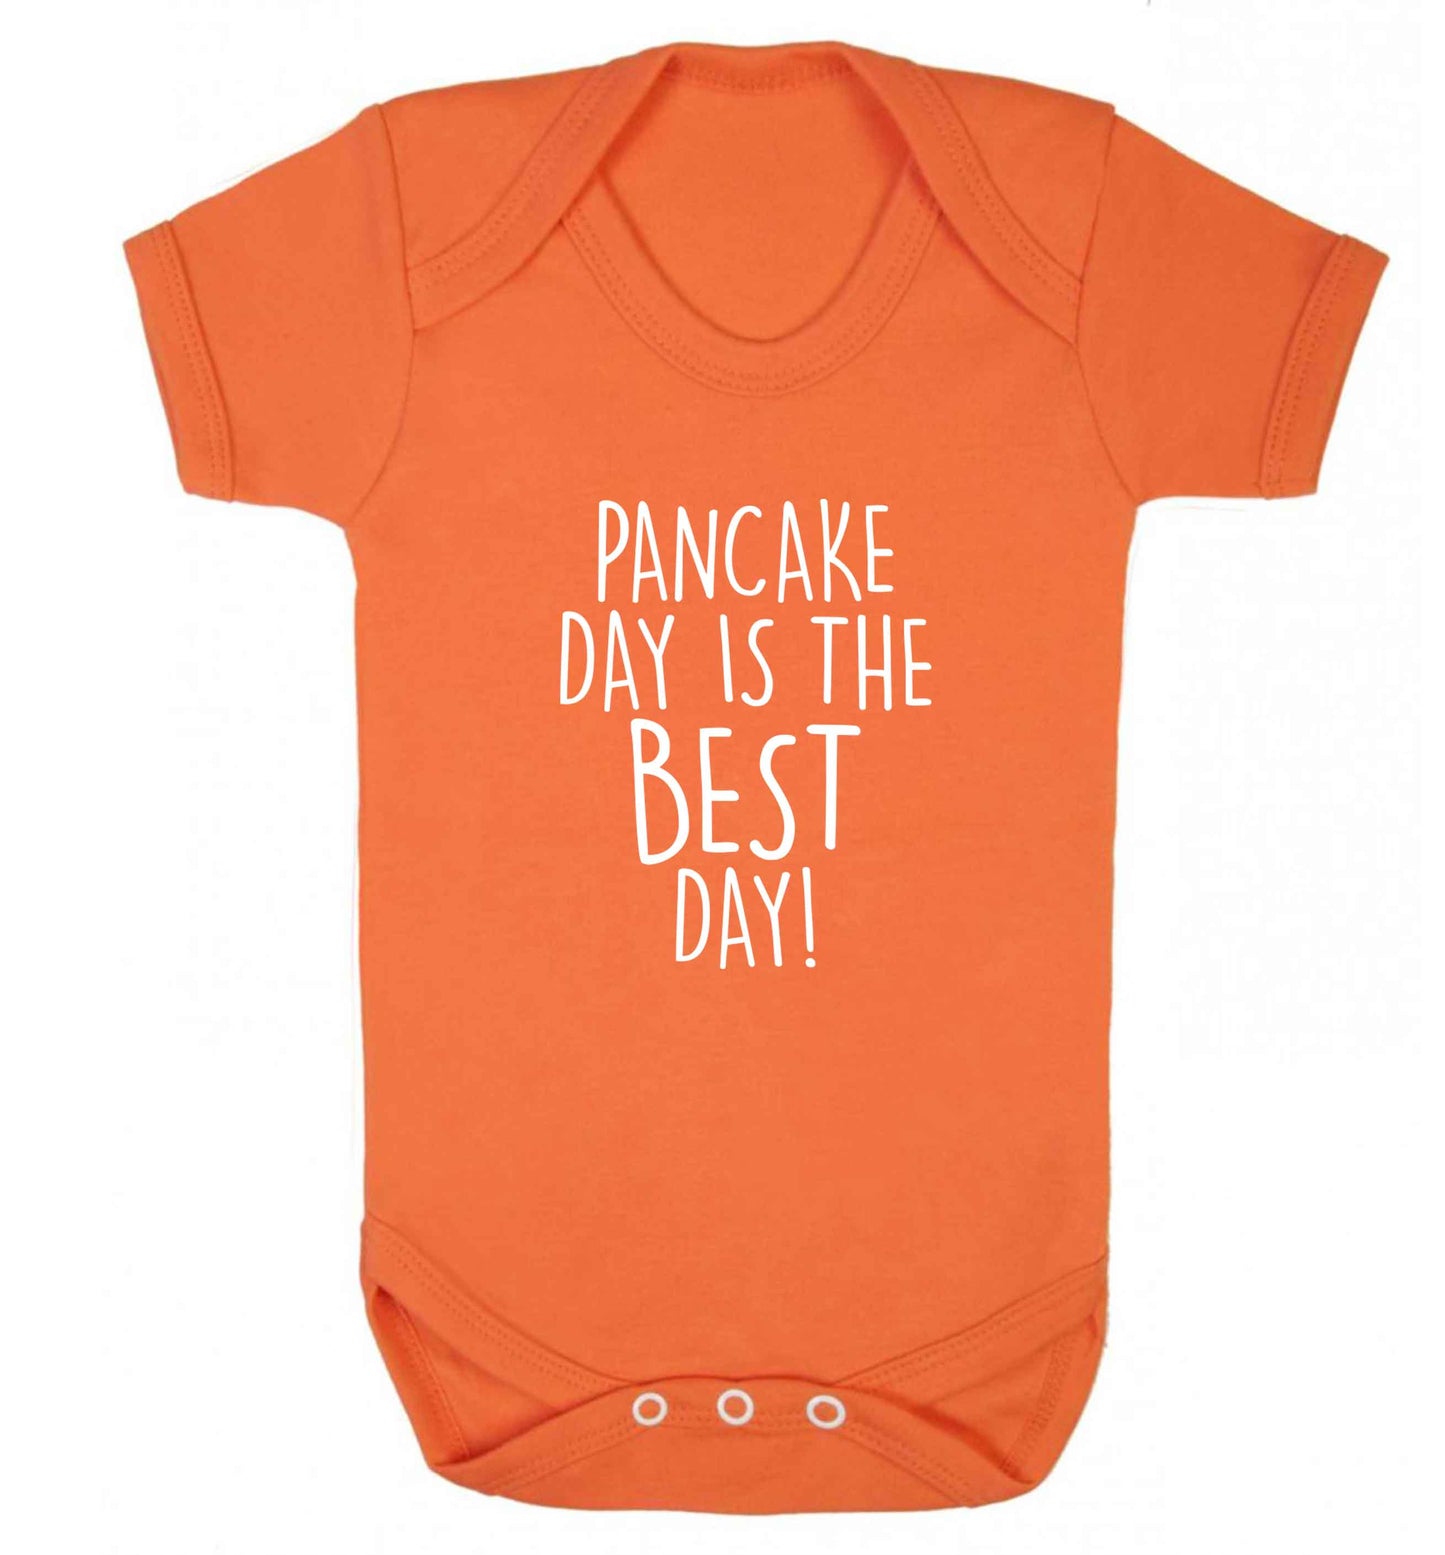 Pancake day is the best day baby vest orange 18-24 months